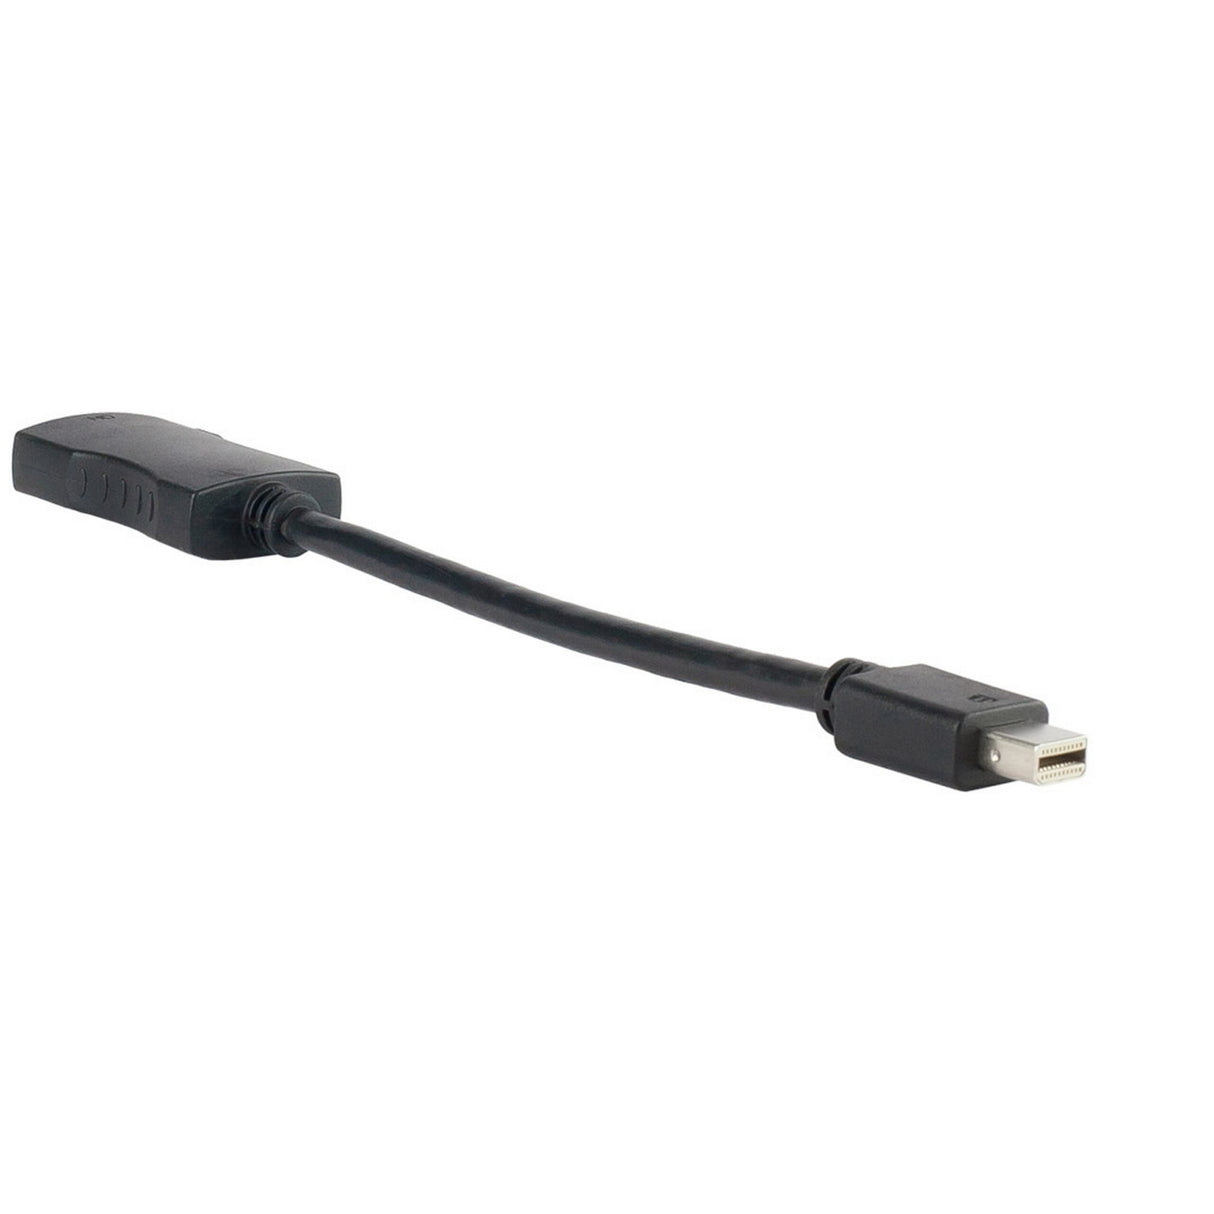 DigitaLinx AR-MDPM-HDF Adapter Cable Mini-DisplayPort Male to HDMI Female, 8 Inches